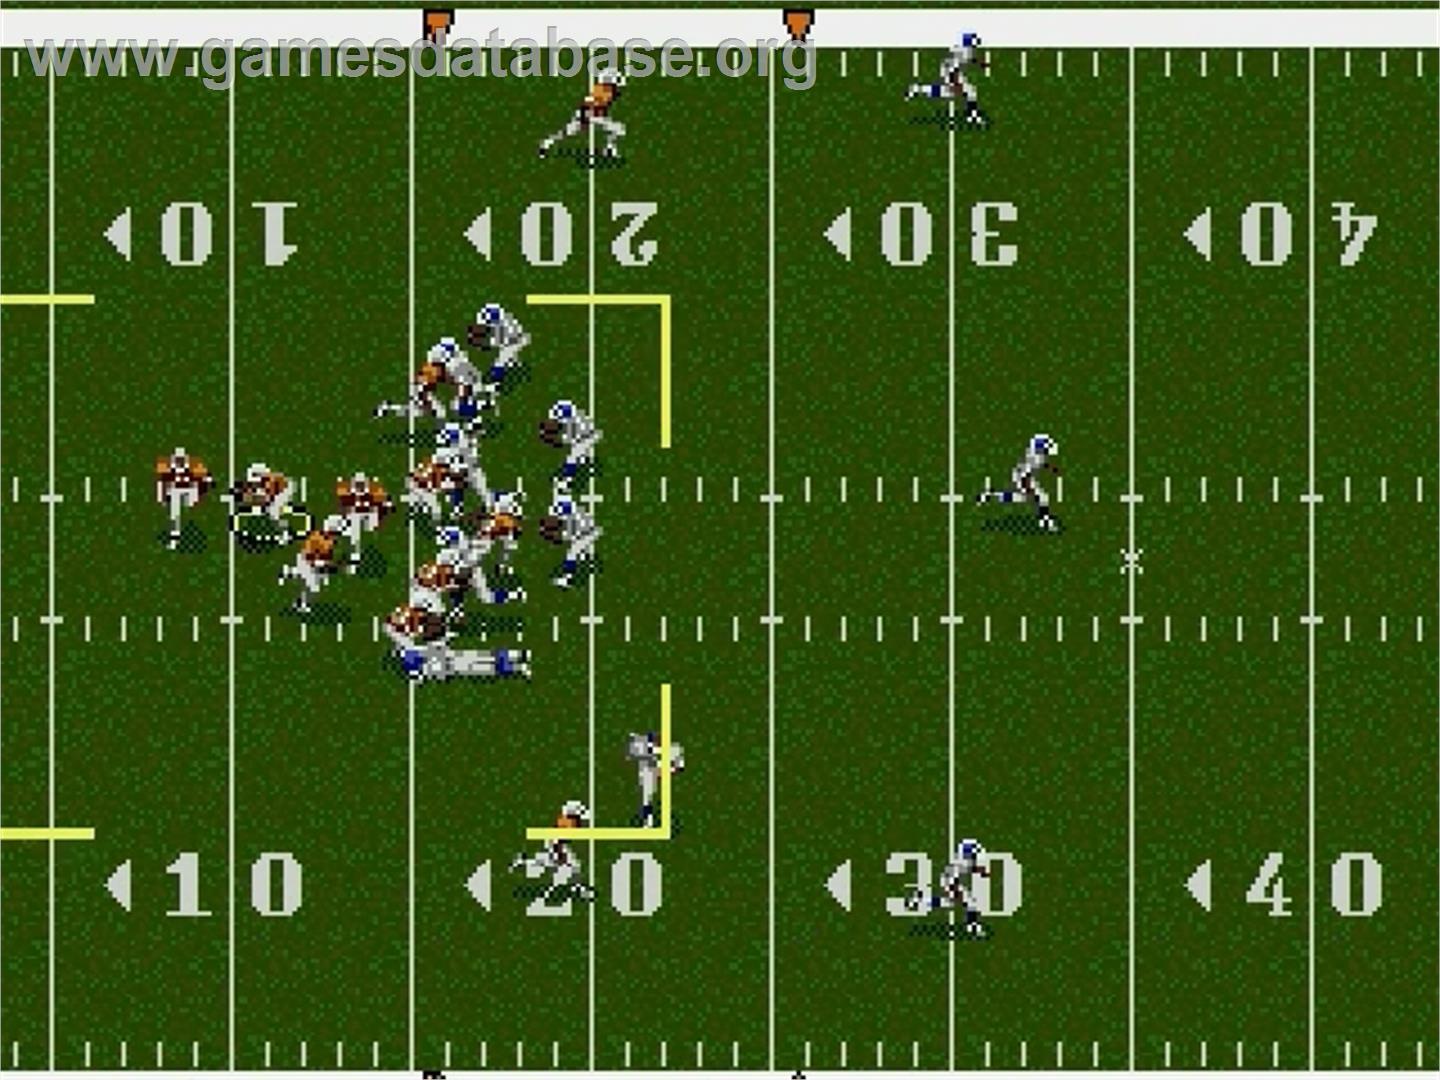 NFL Sports Talk Football '93 Starring Joe Montana - Sega Genesis - Artwork - In Game